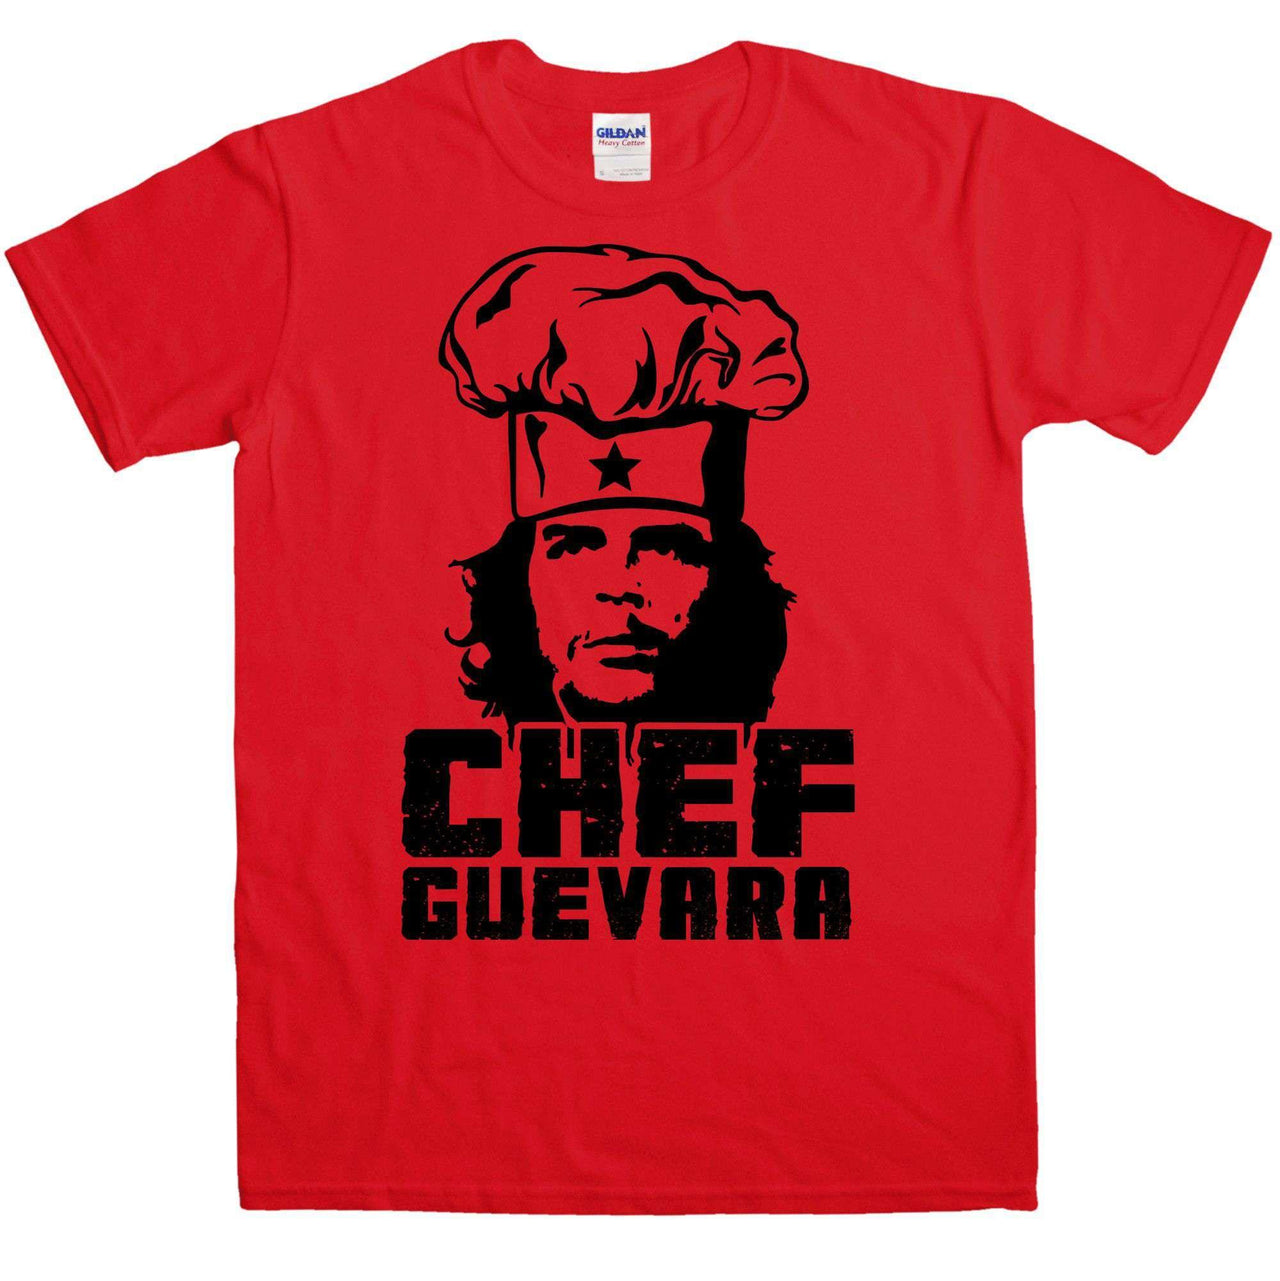 Chef Guevara Graphic T-Shirt For Men 8Ball